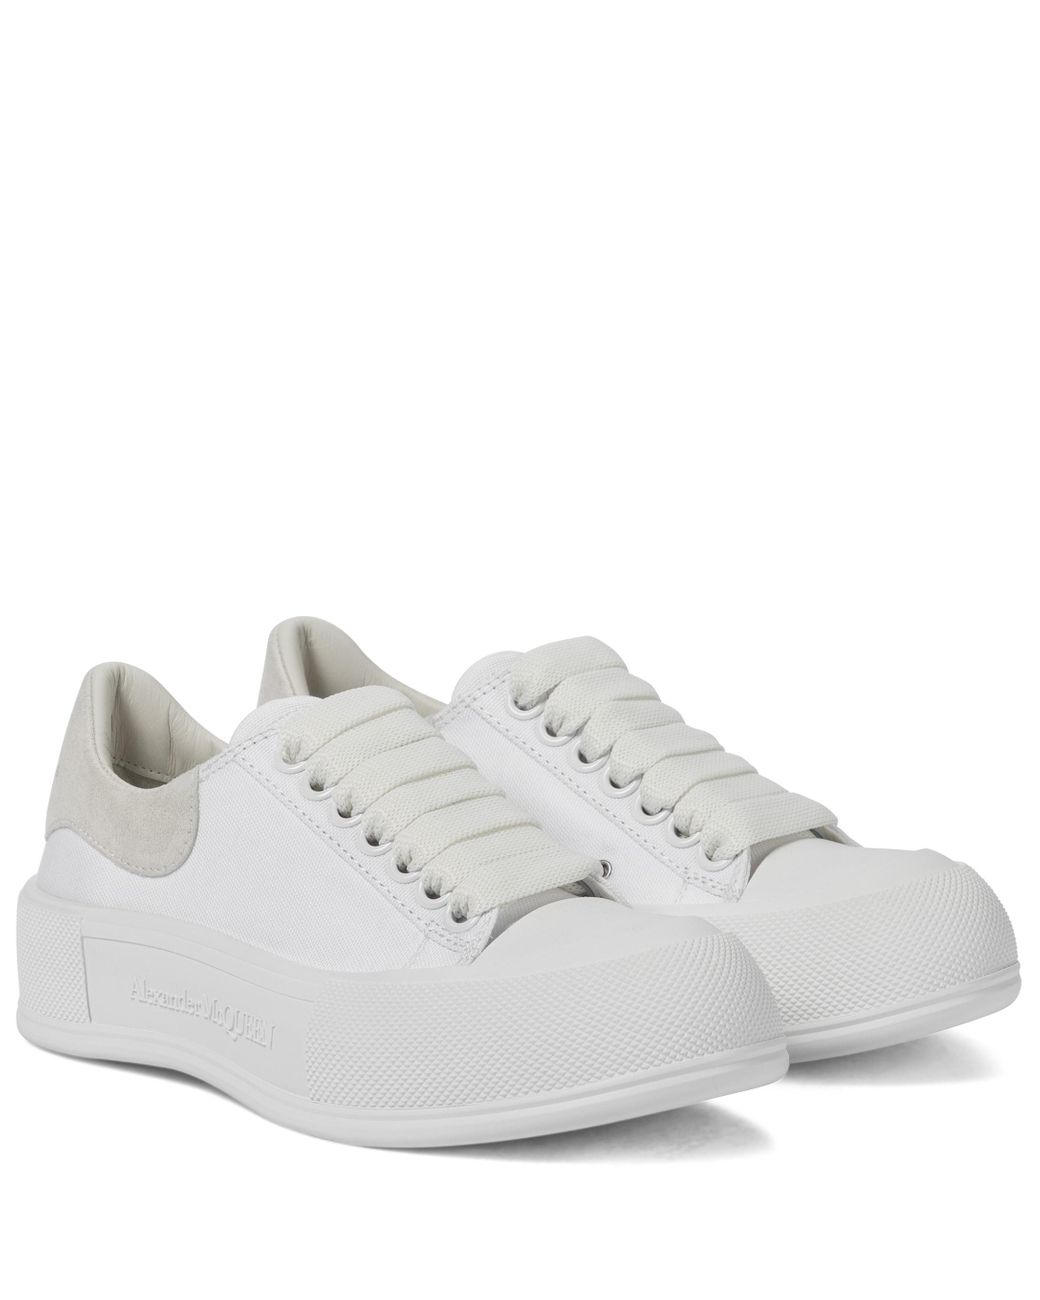 Alexander McQueen Deck Plimsoll Canvas Sneakers in White - Lyst